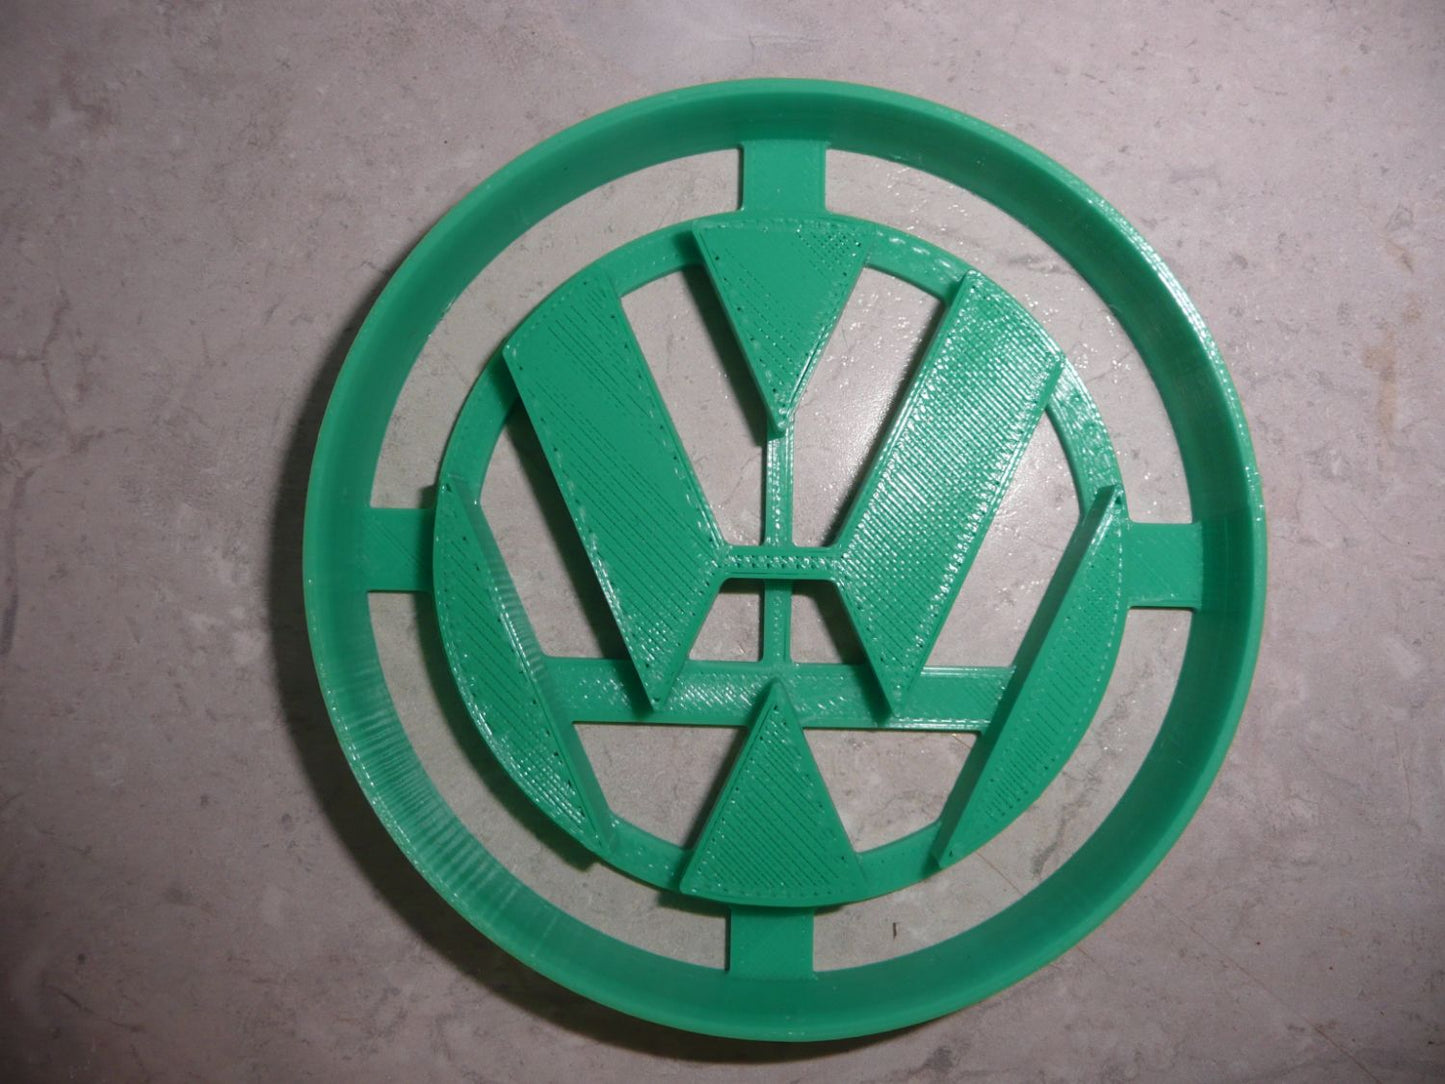 6x VW Volkswagon Vehicle Fondant Cutter Cupcake Topper 1.75 IN USA FD4543